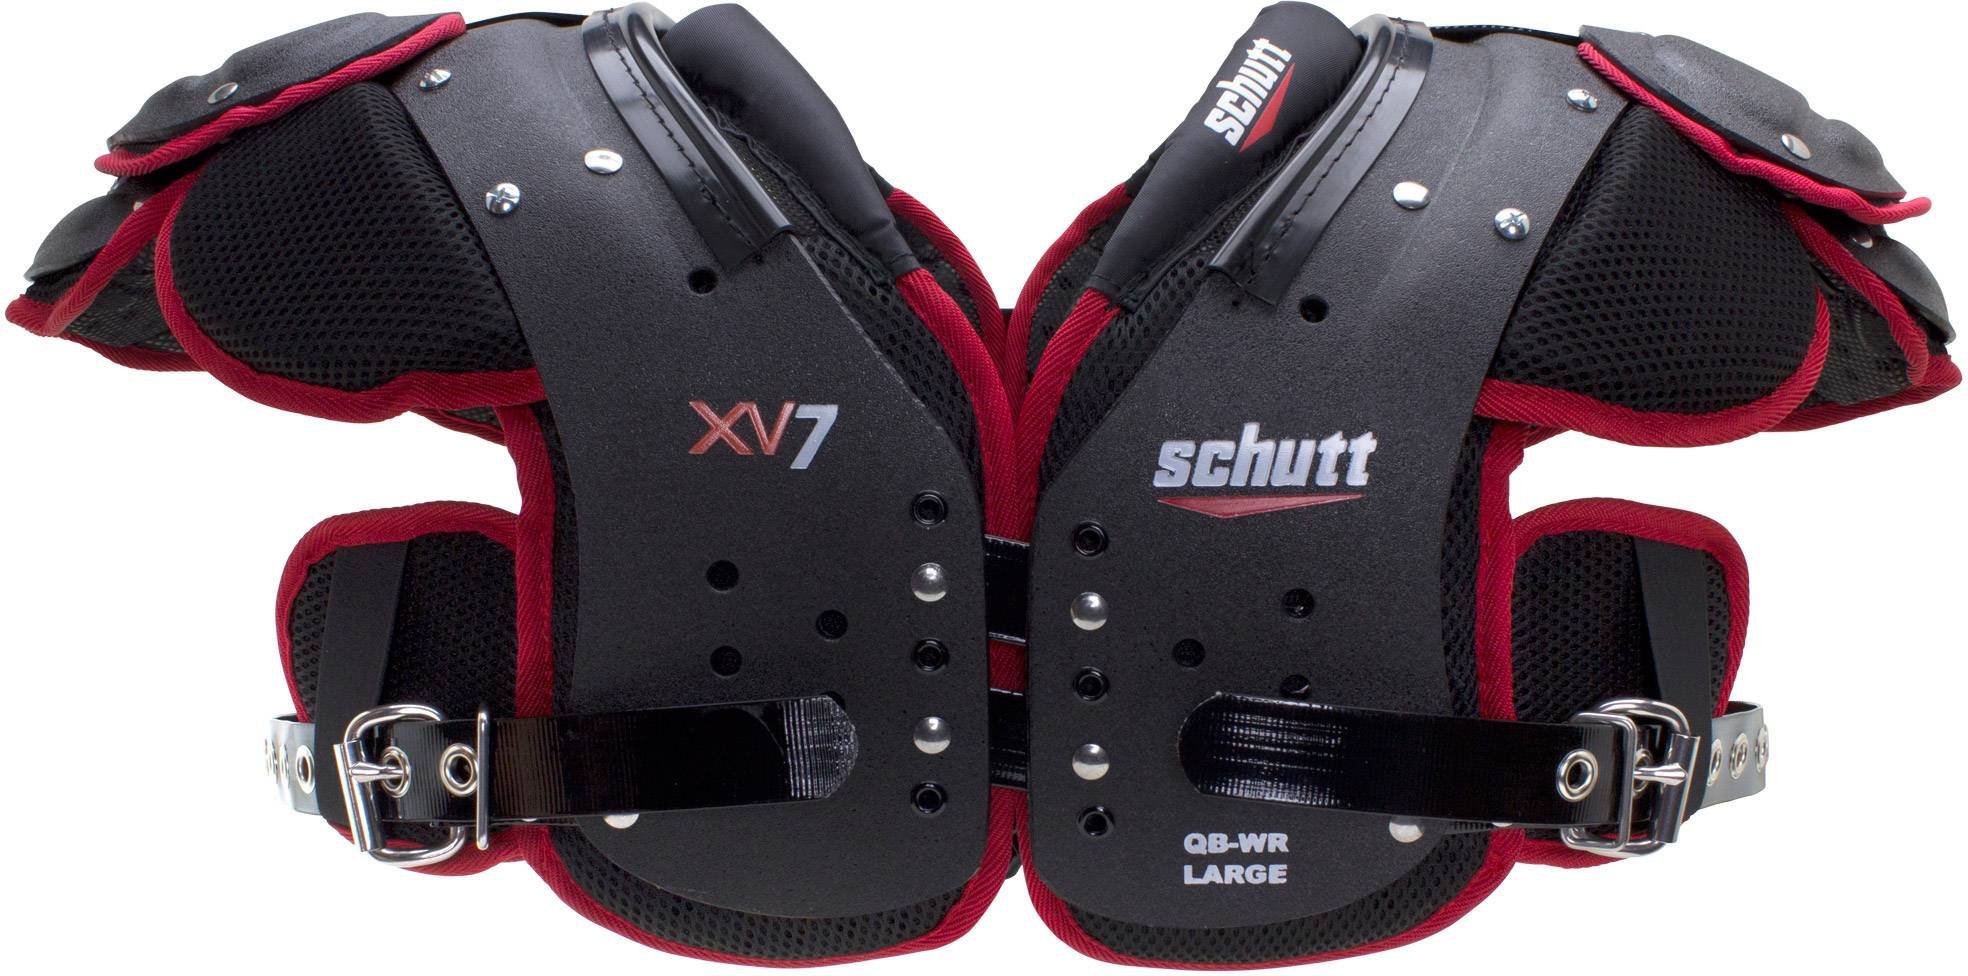 Schutt XV7 Adult Football Shoulder Pads - QB/WR